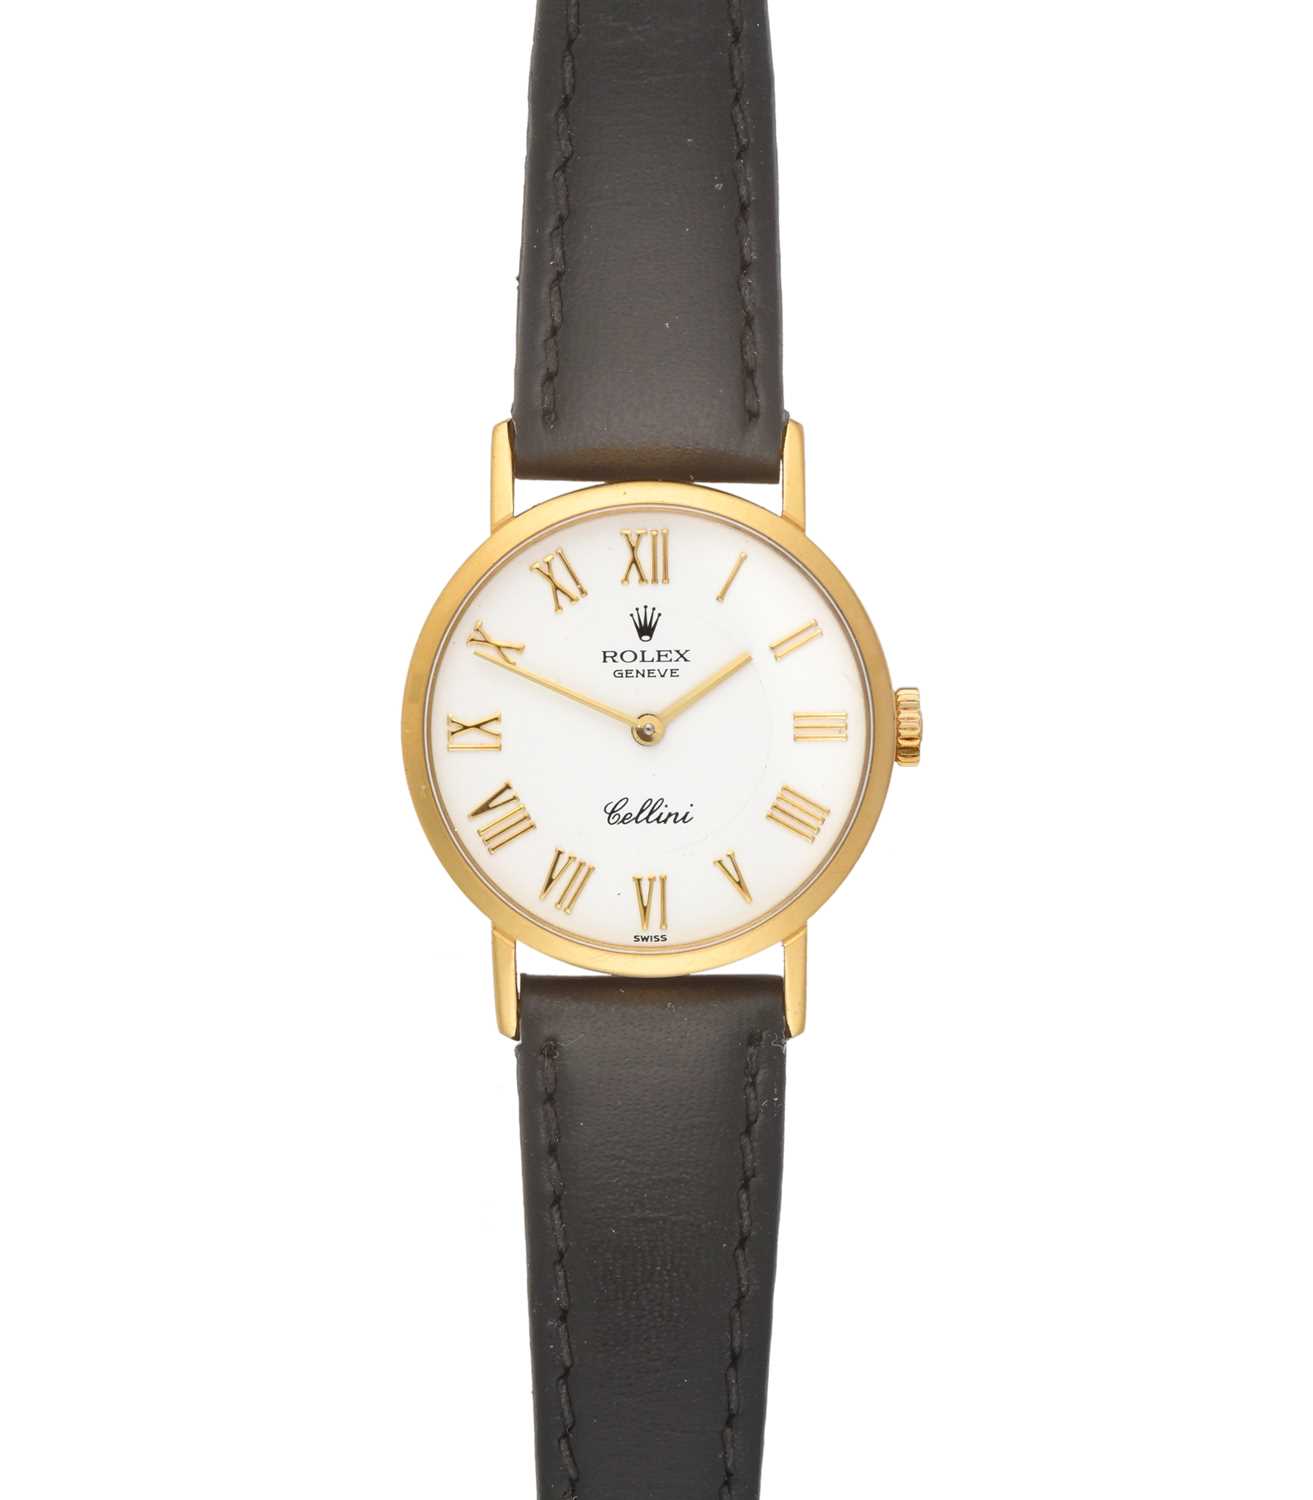 Rolex: A Lady's 18 Carat Gold Wristwatch signed Rolex, Geneve, model: Cellini, ref: 4109, circa 1995